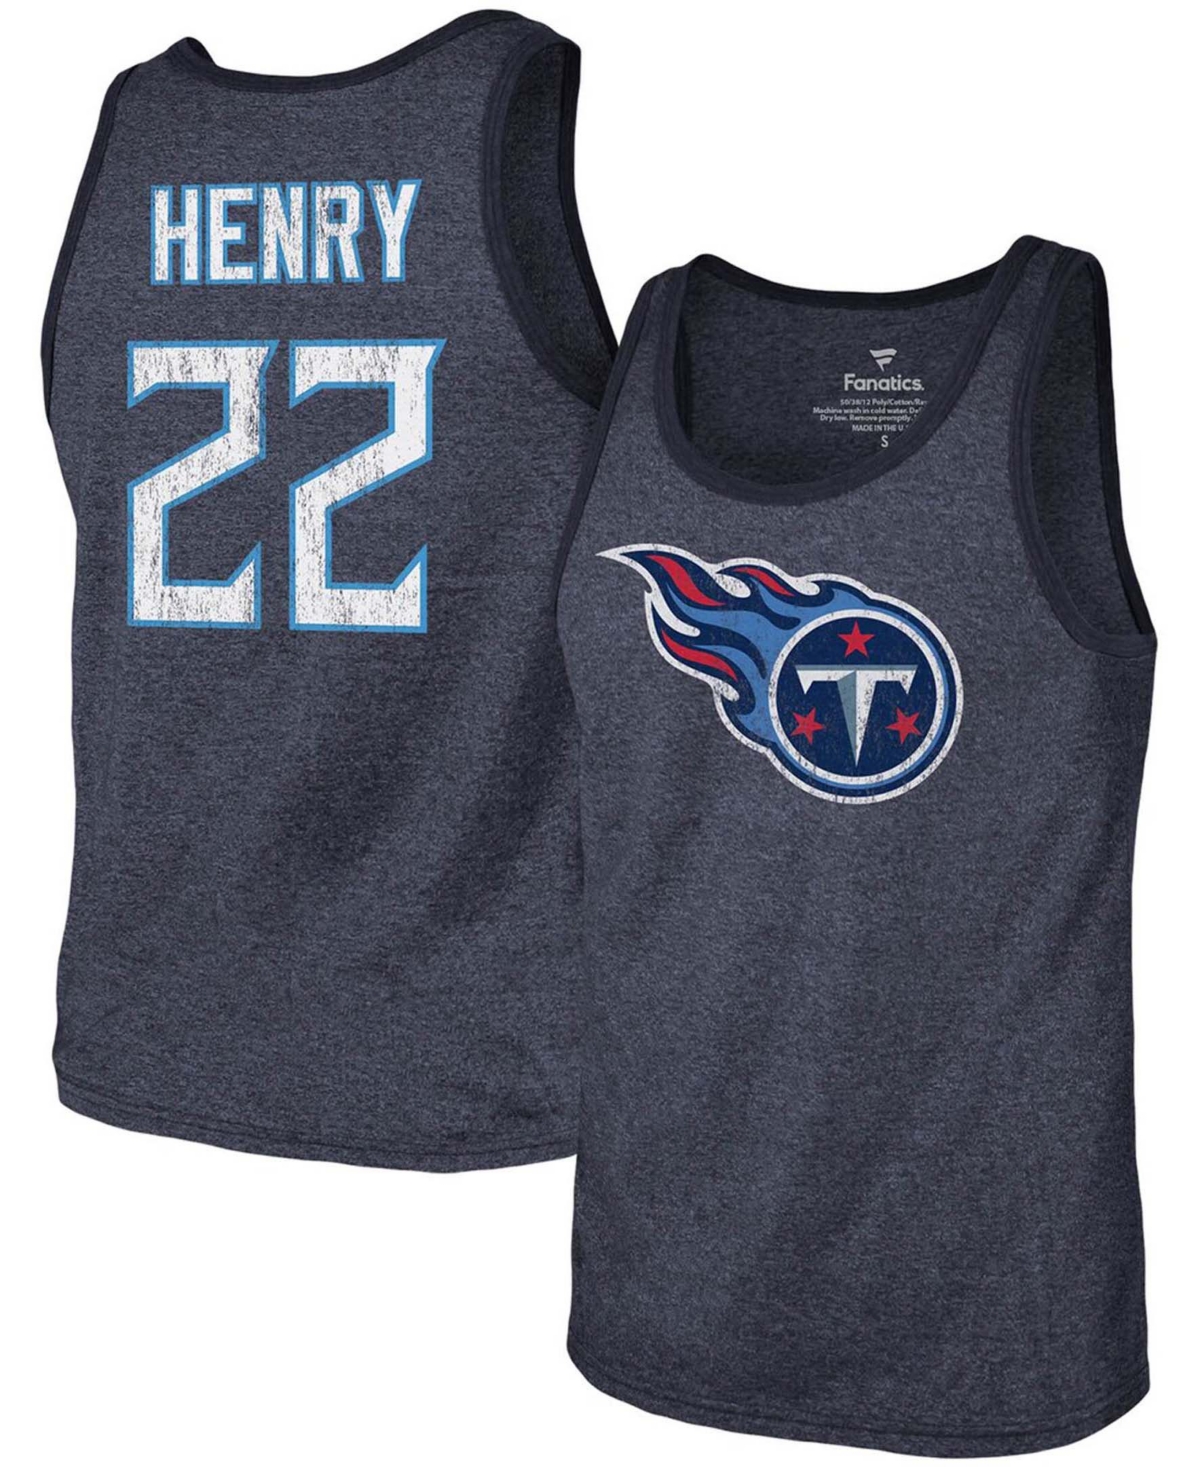 Fanatics Men's Derrick Henry Navy Tennessee Titans Name Number Tri-blend Tank Top